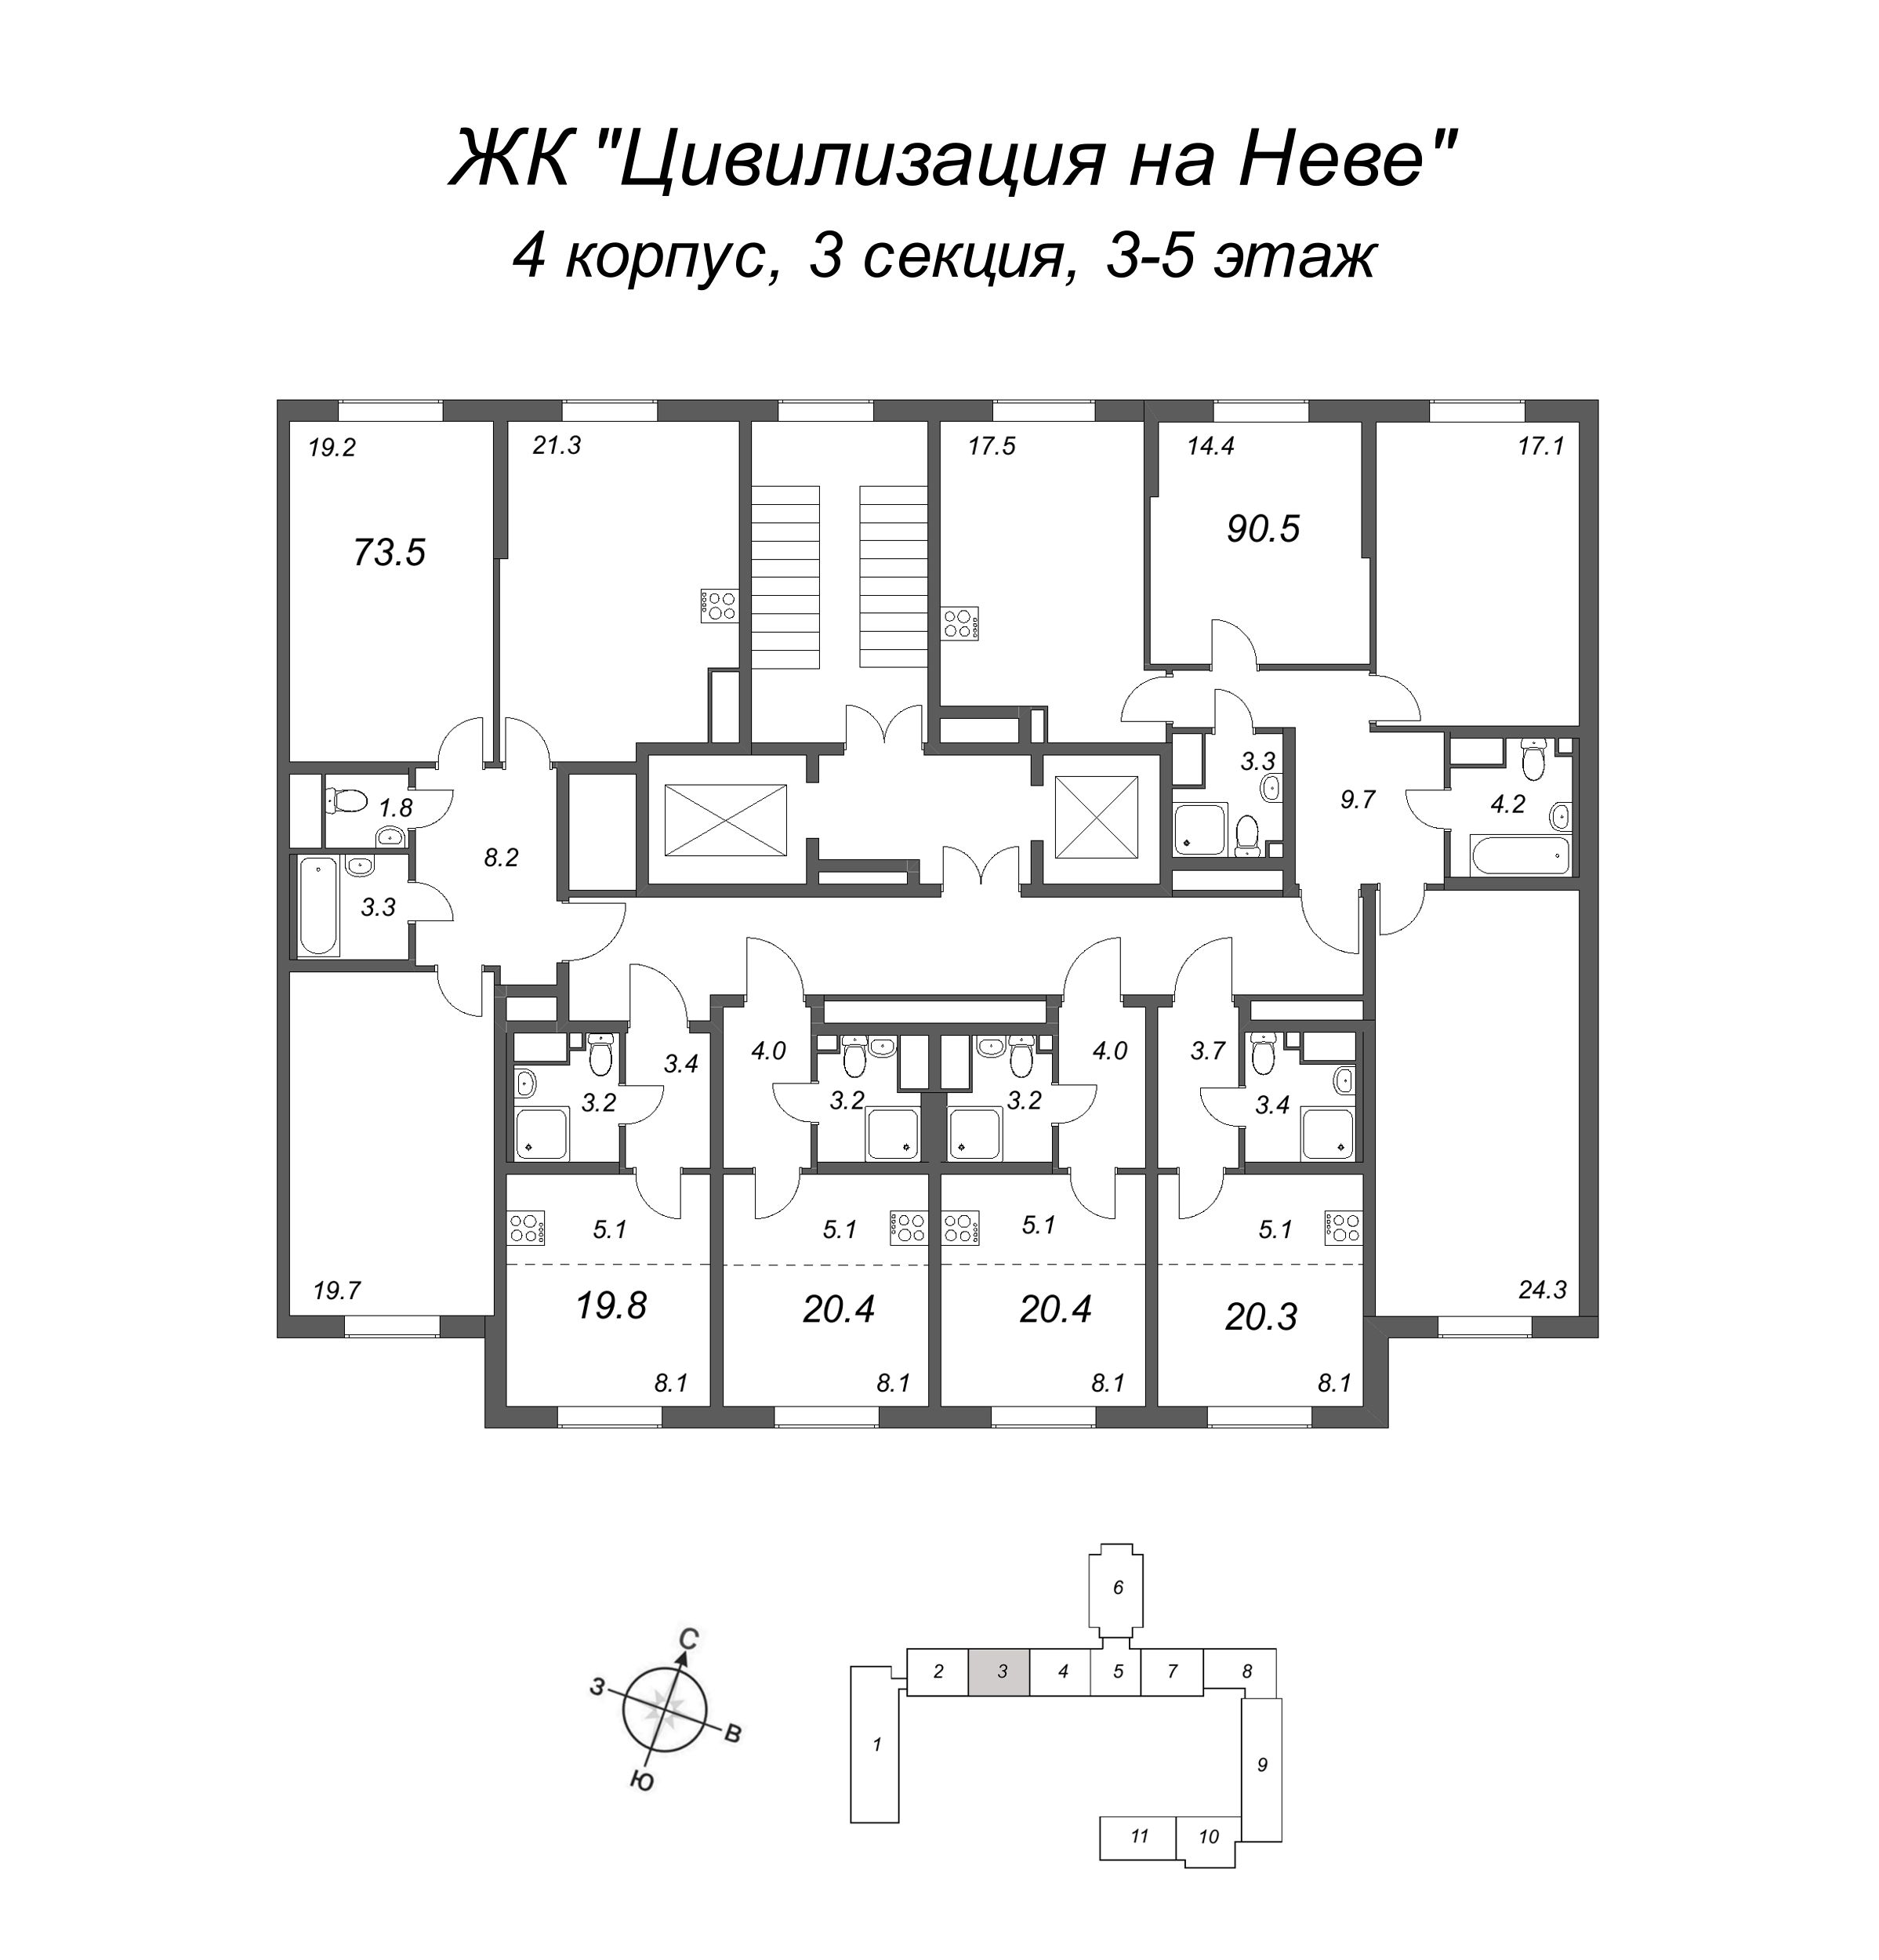 4-комнатная (Евро) квартира, 90.5 м² - планировка этажа